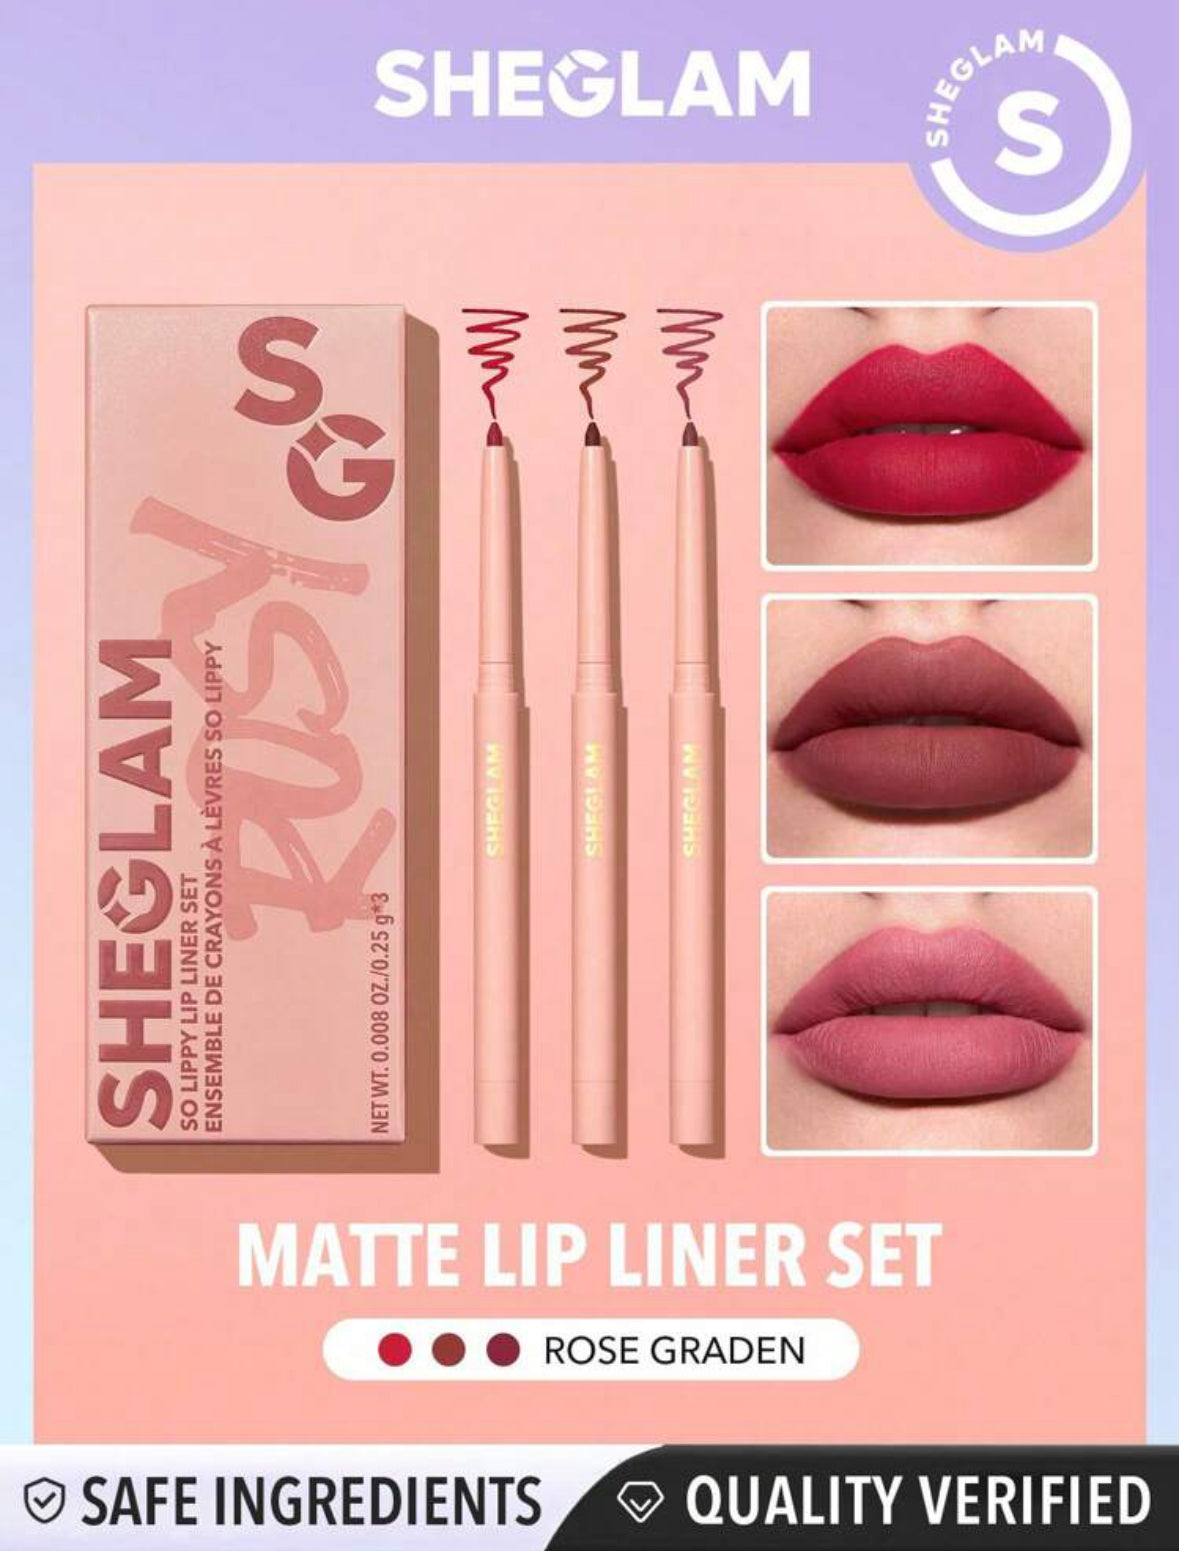 Sheglam so lippy lip liner set